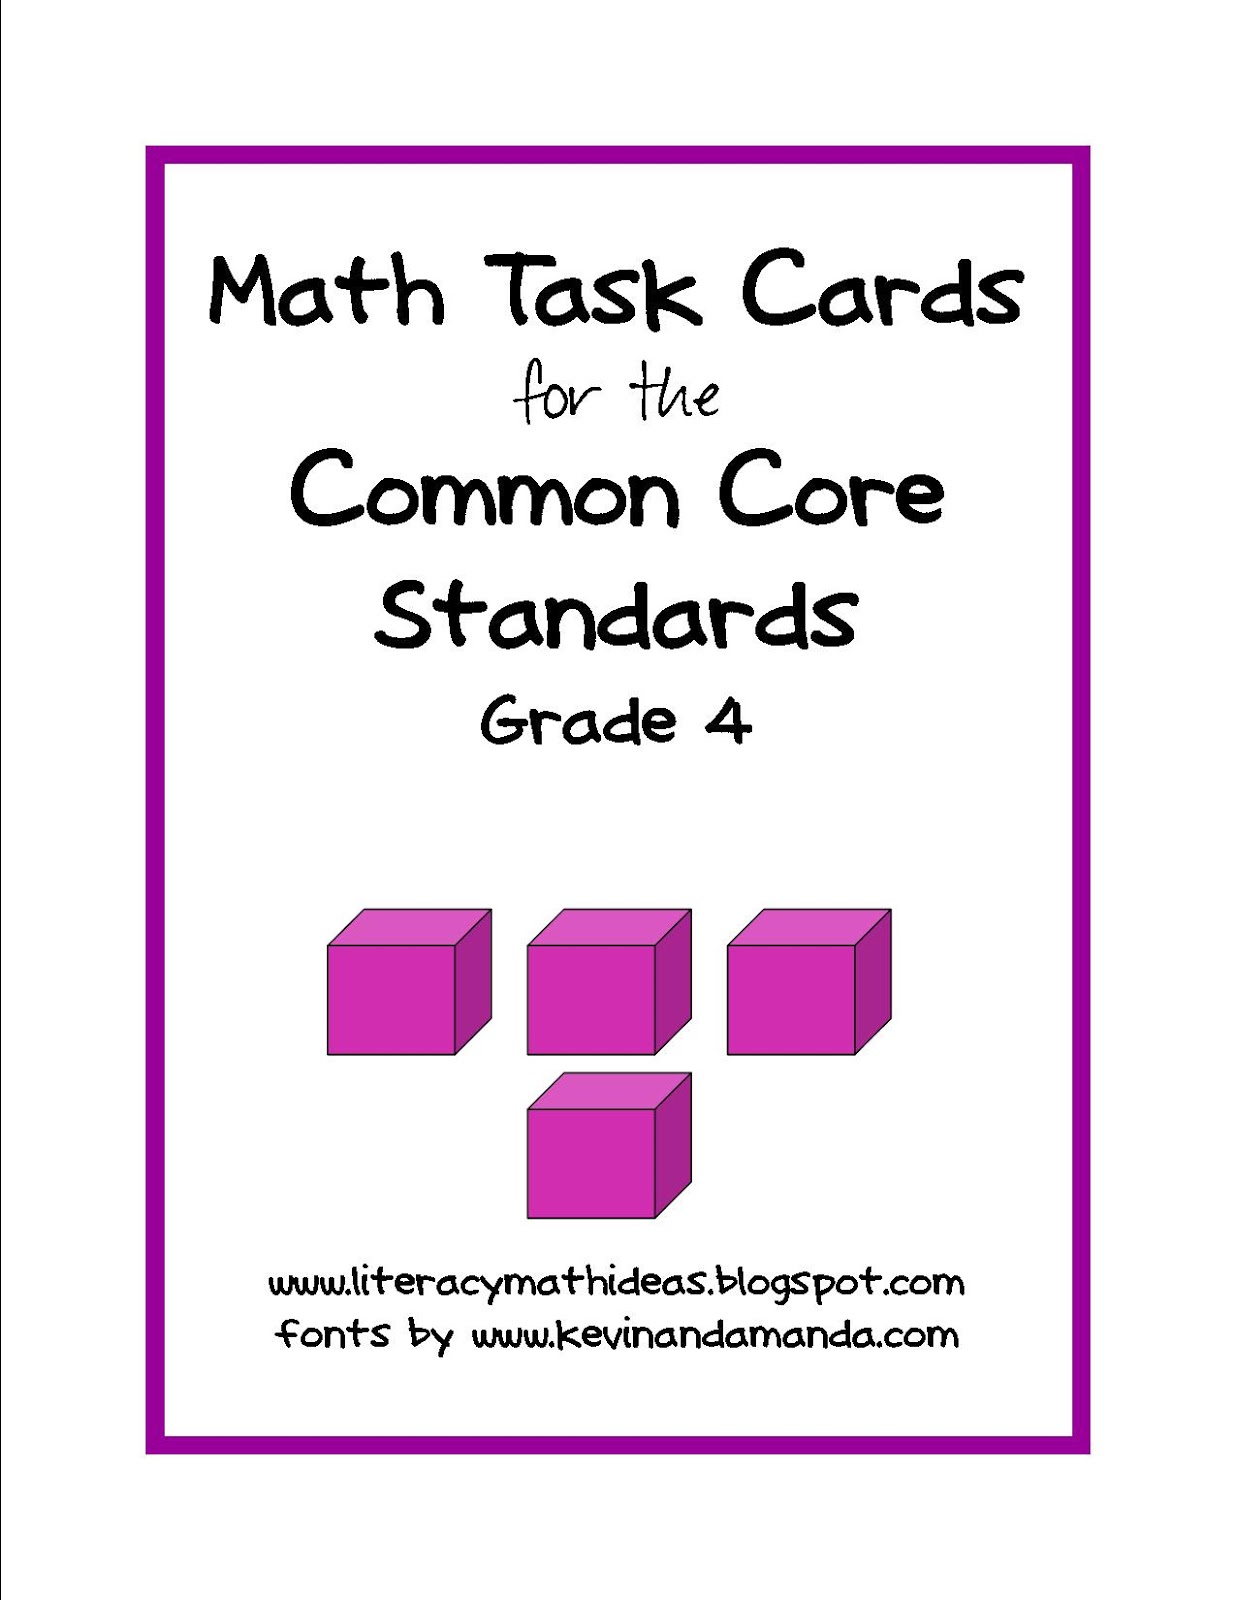 literacy-math-ideas-math-grade-4-common-core-task-cards